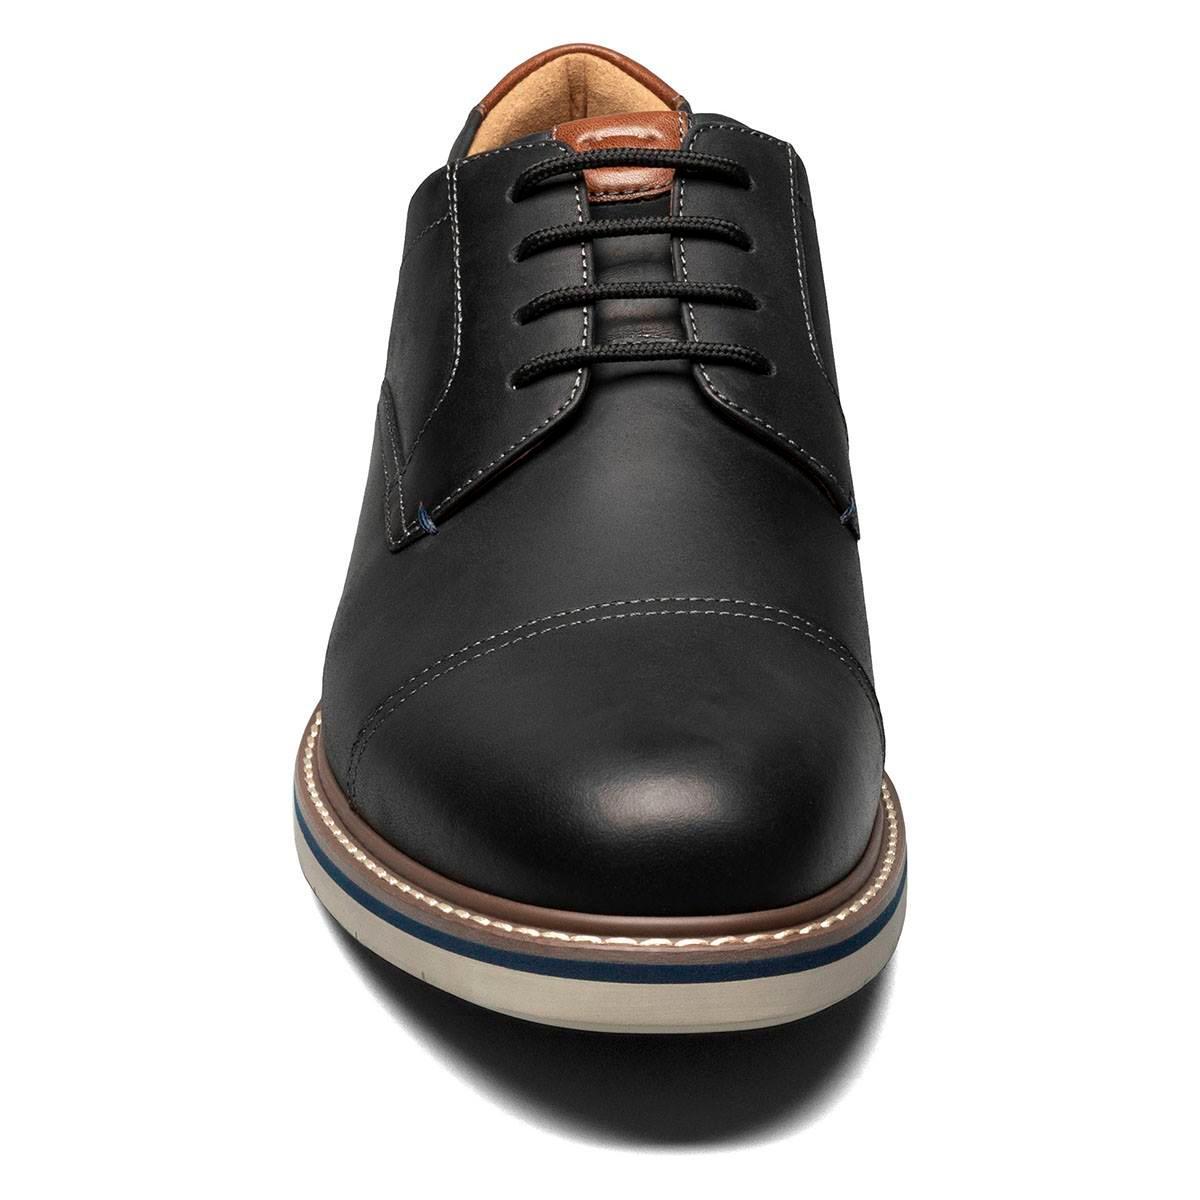 Big & Tall Florsheim Norwalk CapToe Oxford Shoes Product Image